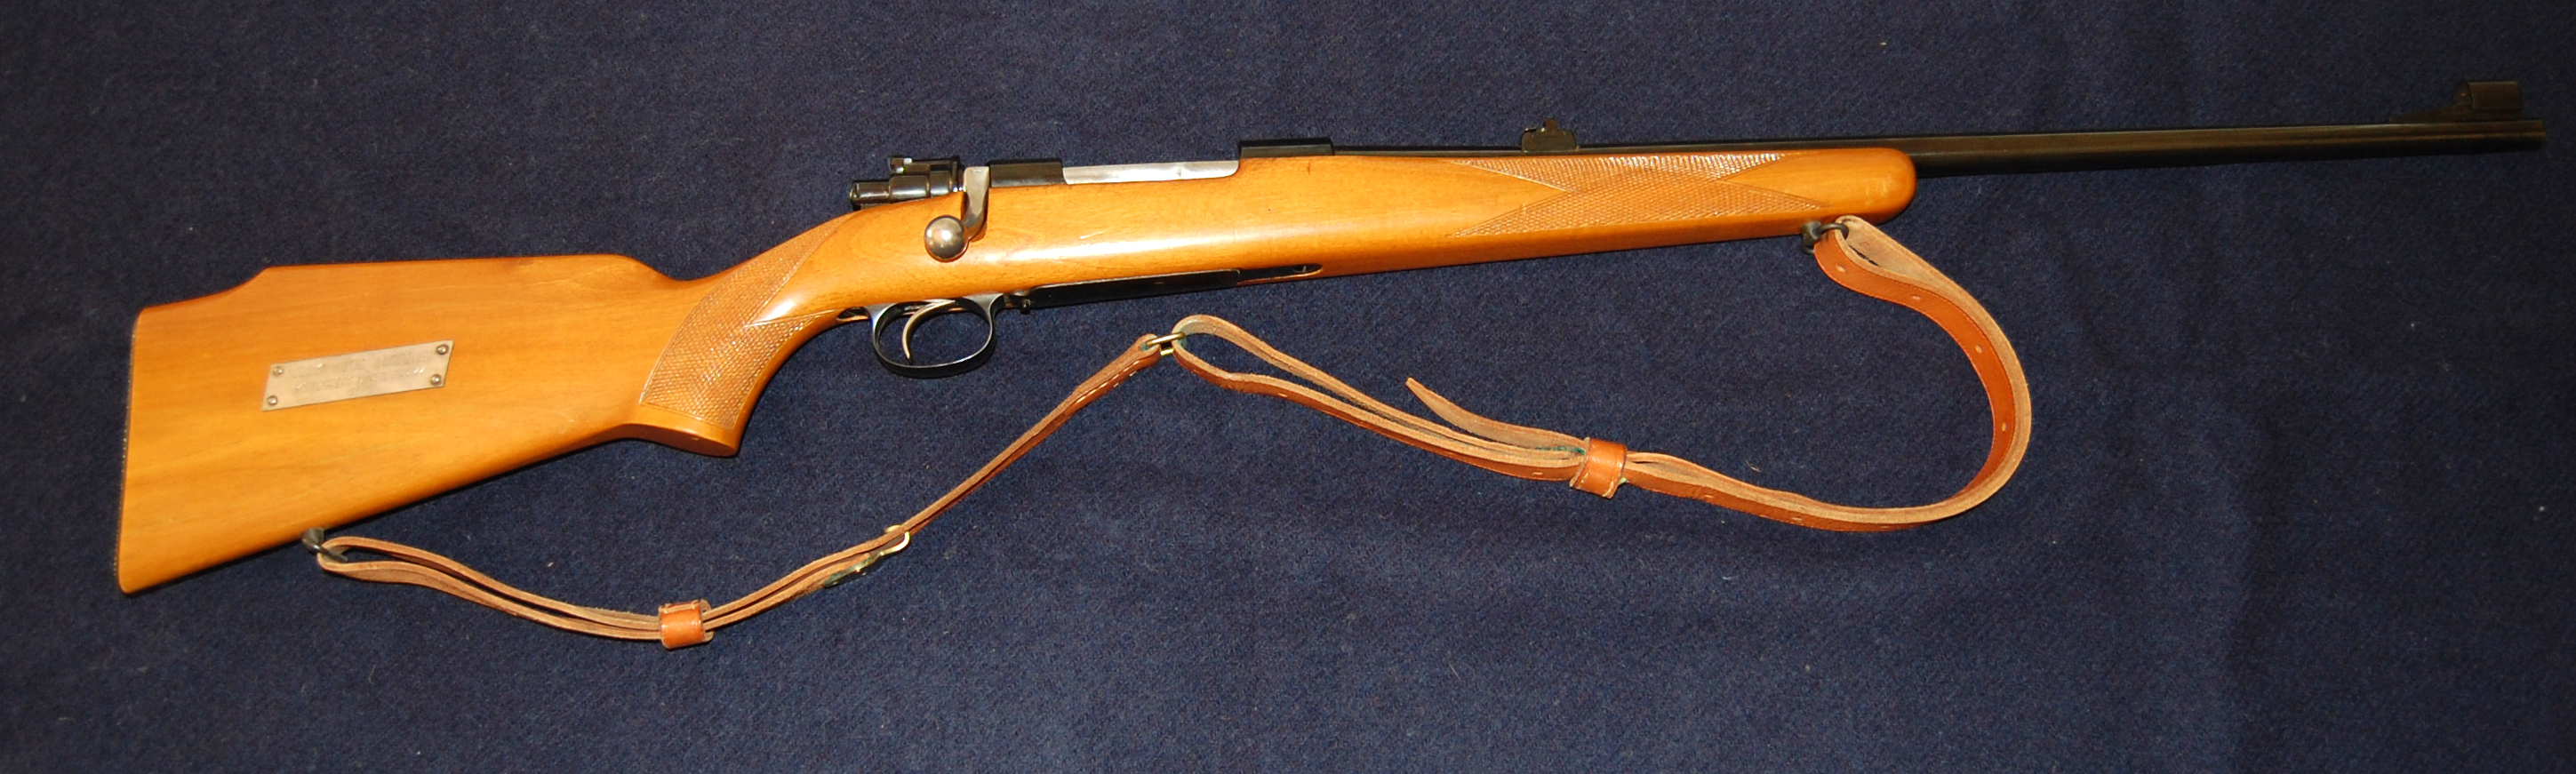 ./guns/rifle/bilder/Rifle-Kongsberg-Mauser-M55-1.jpg